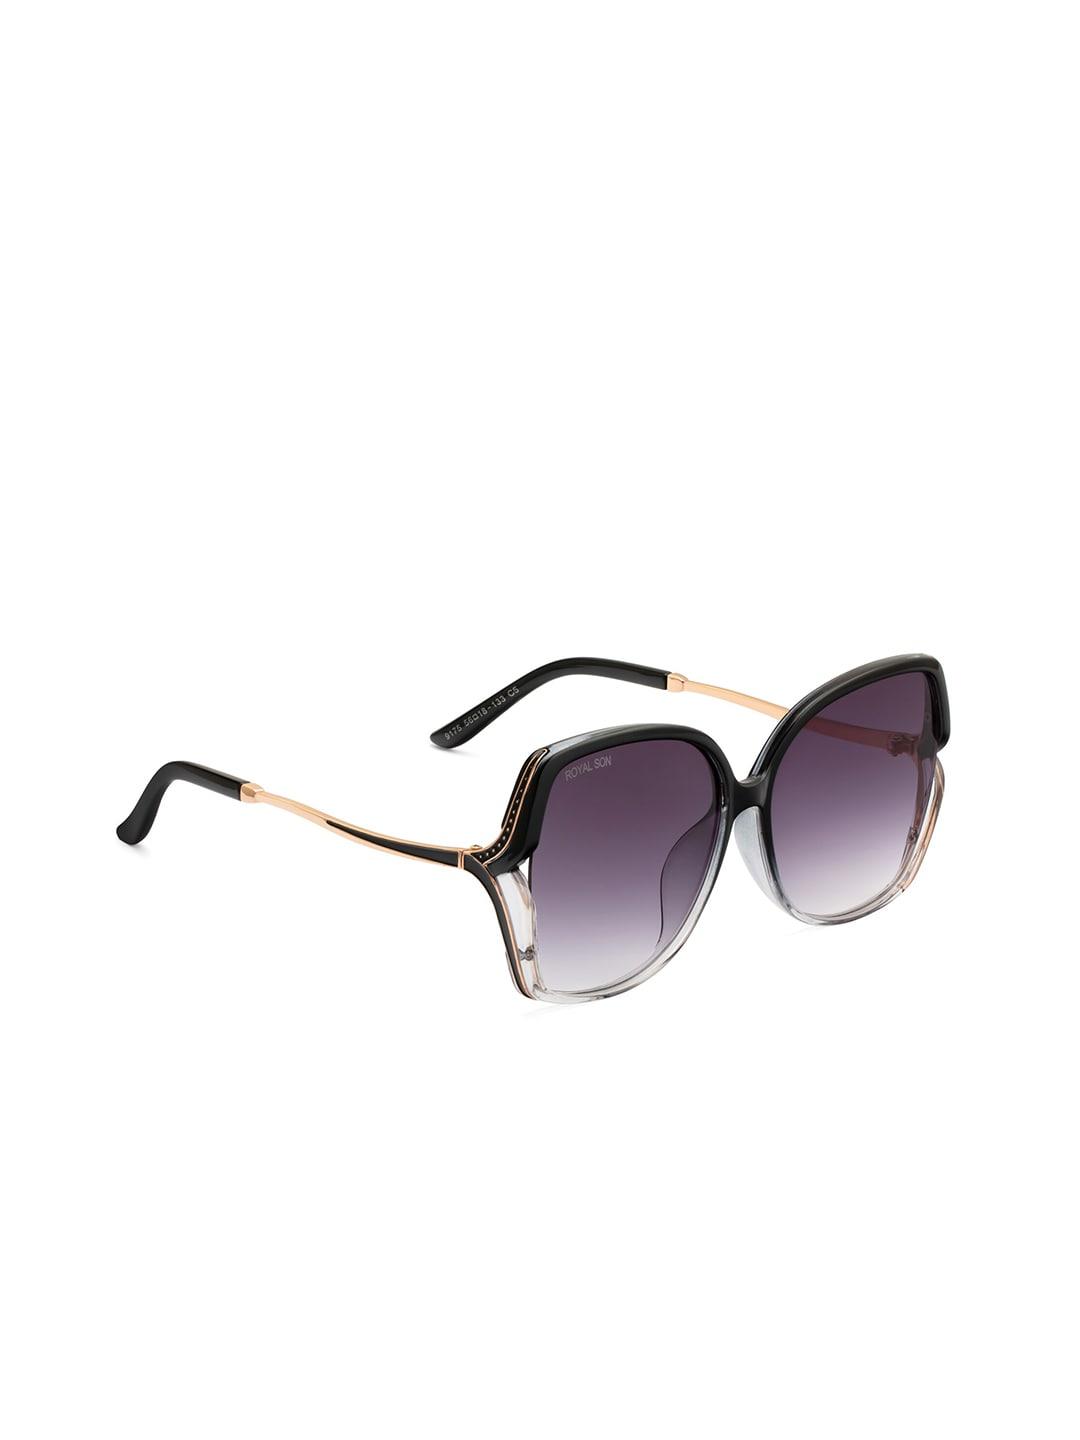 royal-son-women-grey-lens-&-black-oversized-sunglasses-with-uv-protected-lens